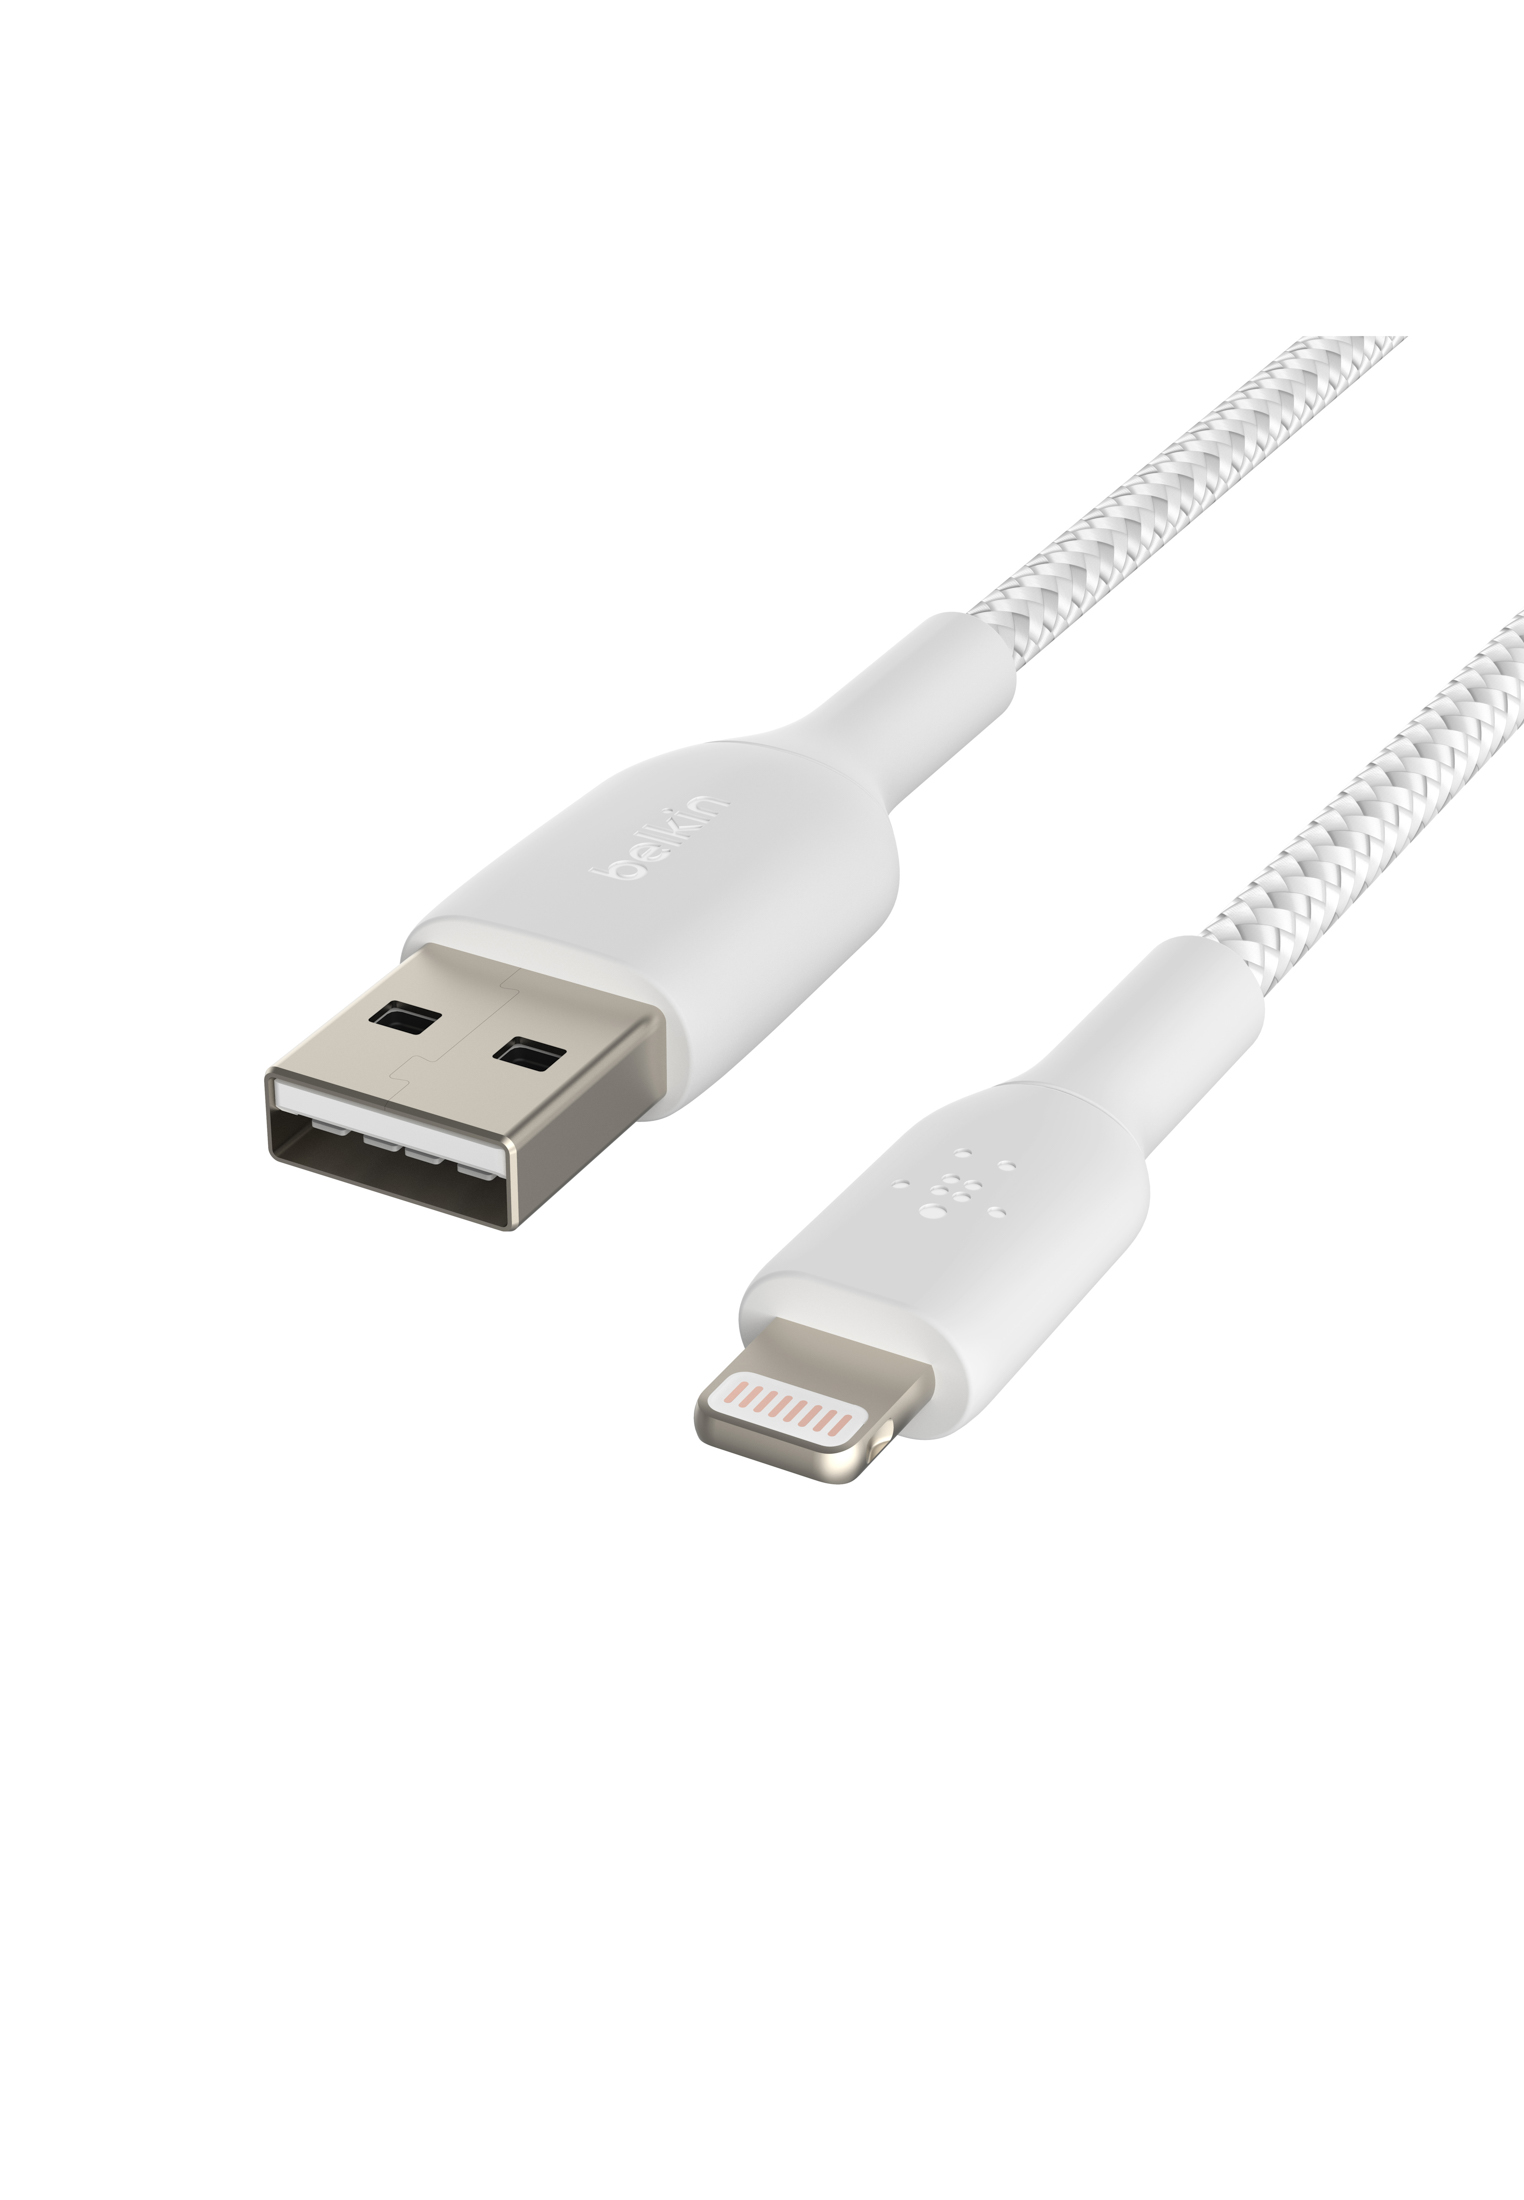 BELKIN BOOST CHARGE™, Lightningkabel USB-A, weiß m, 2